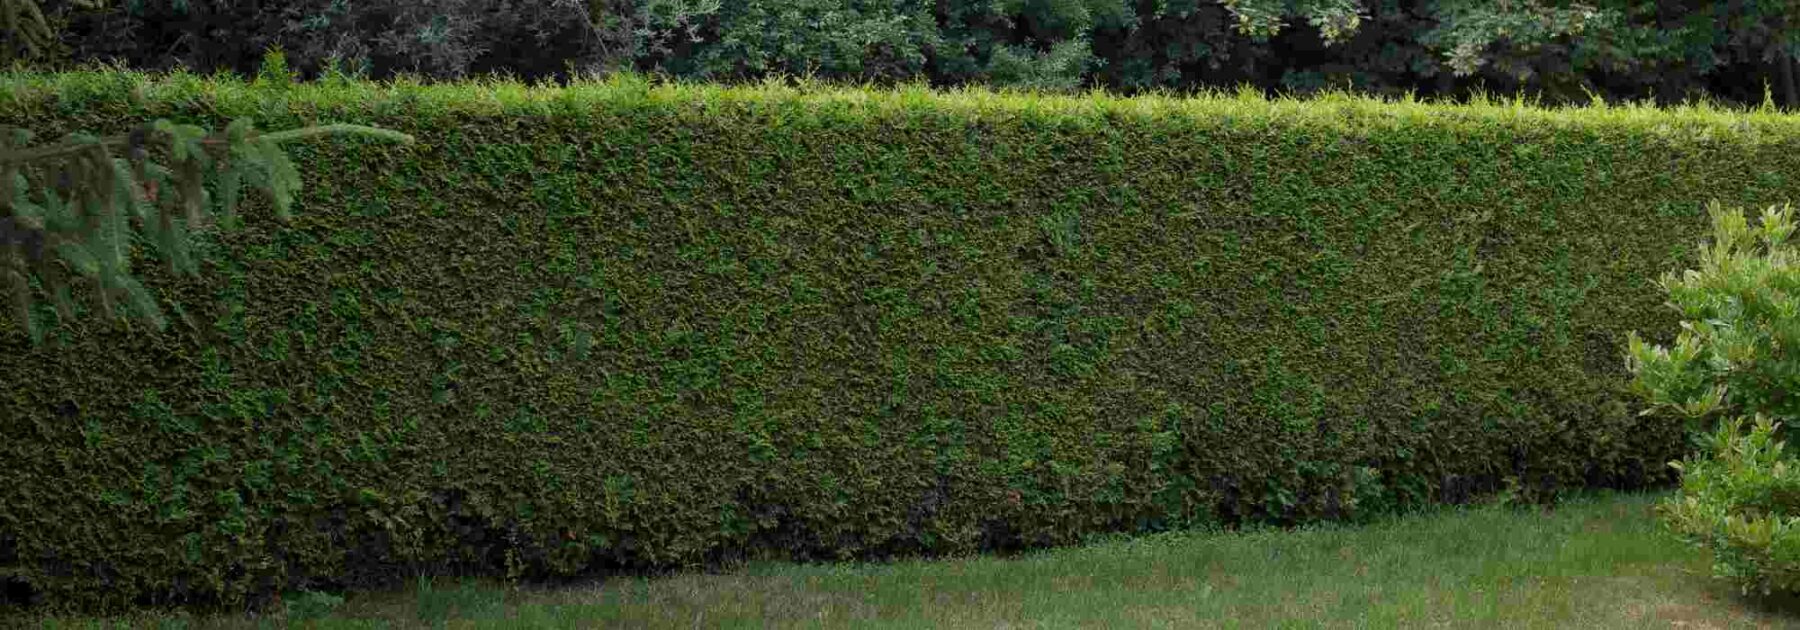 Installer un mur anti bruit dans son jardin contre un voisin